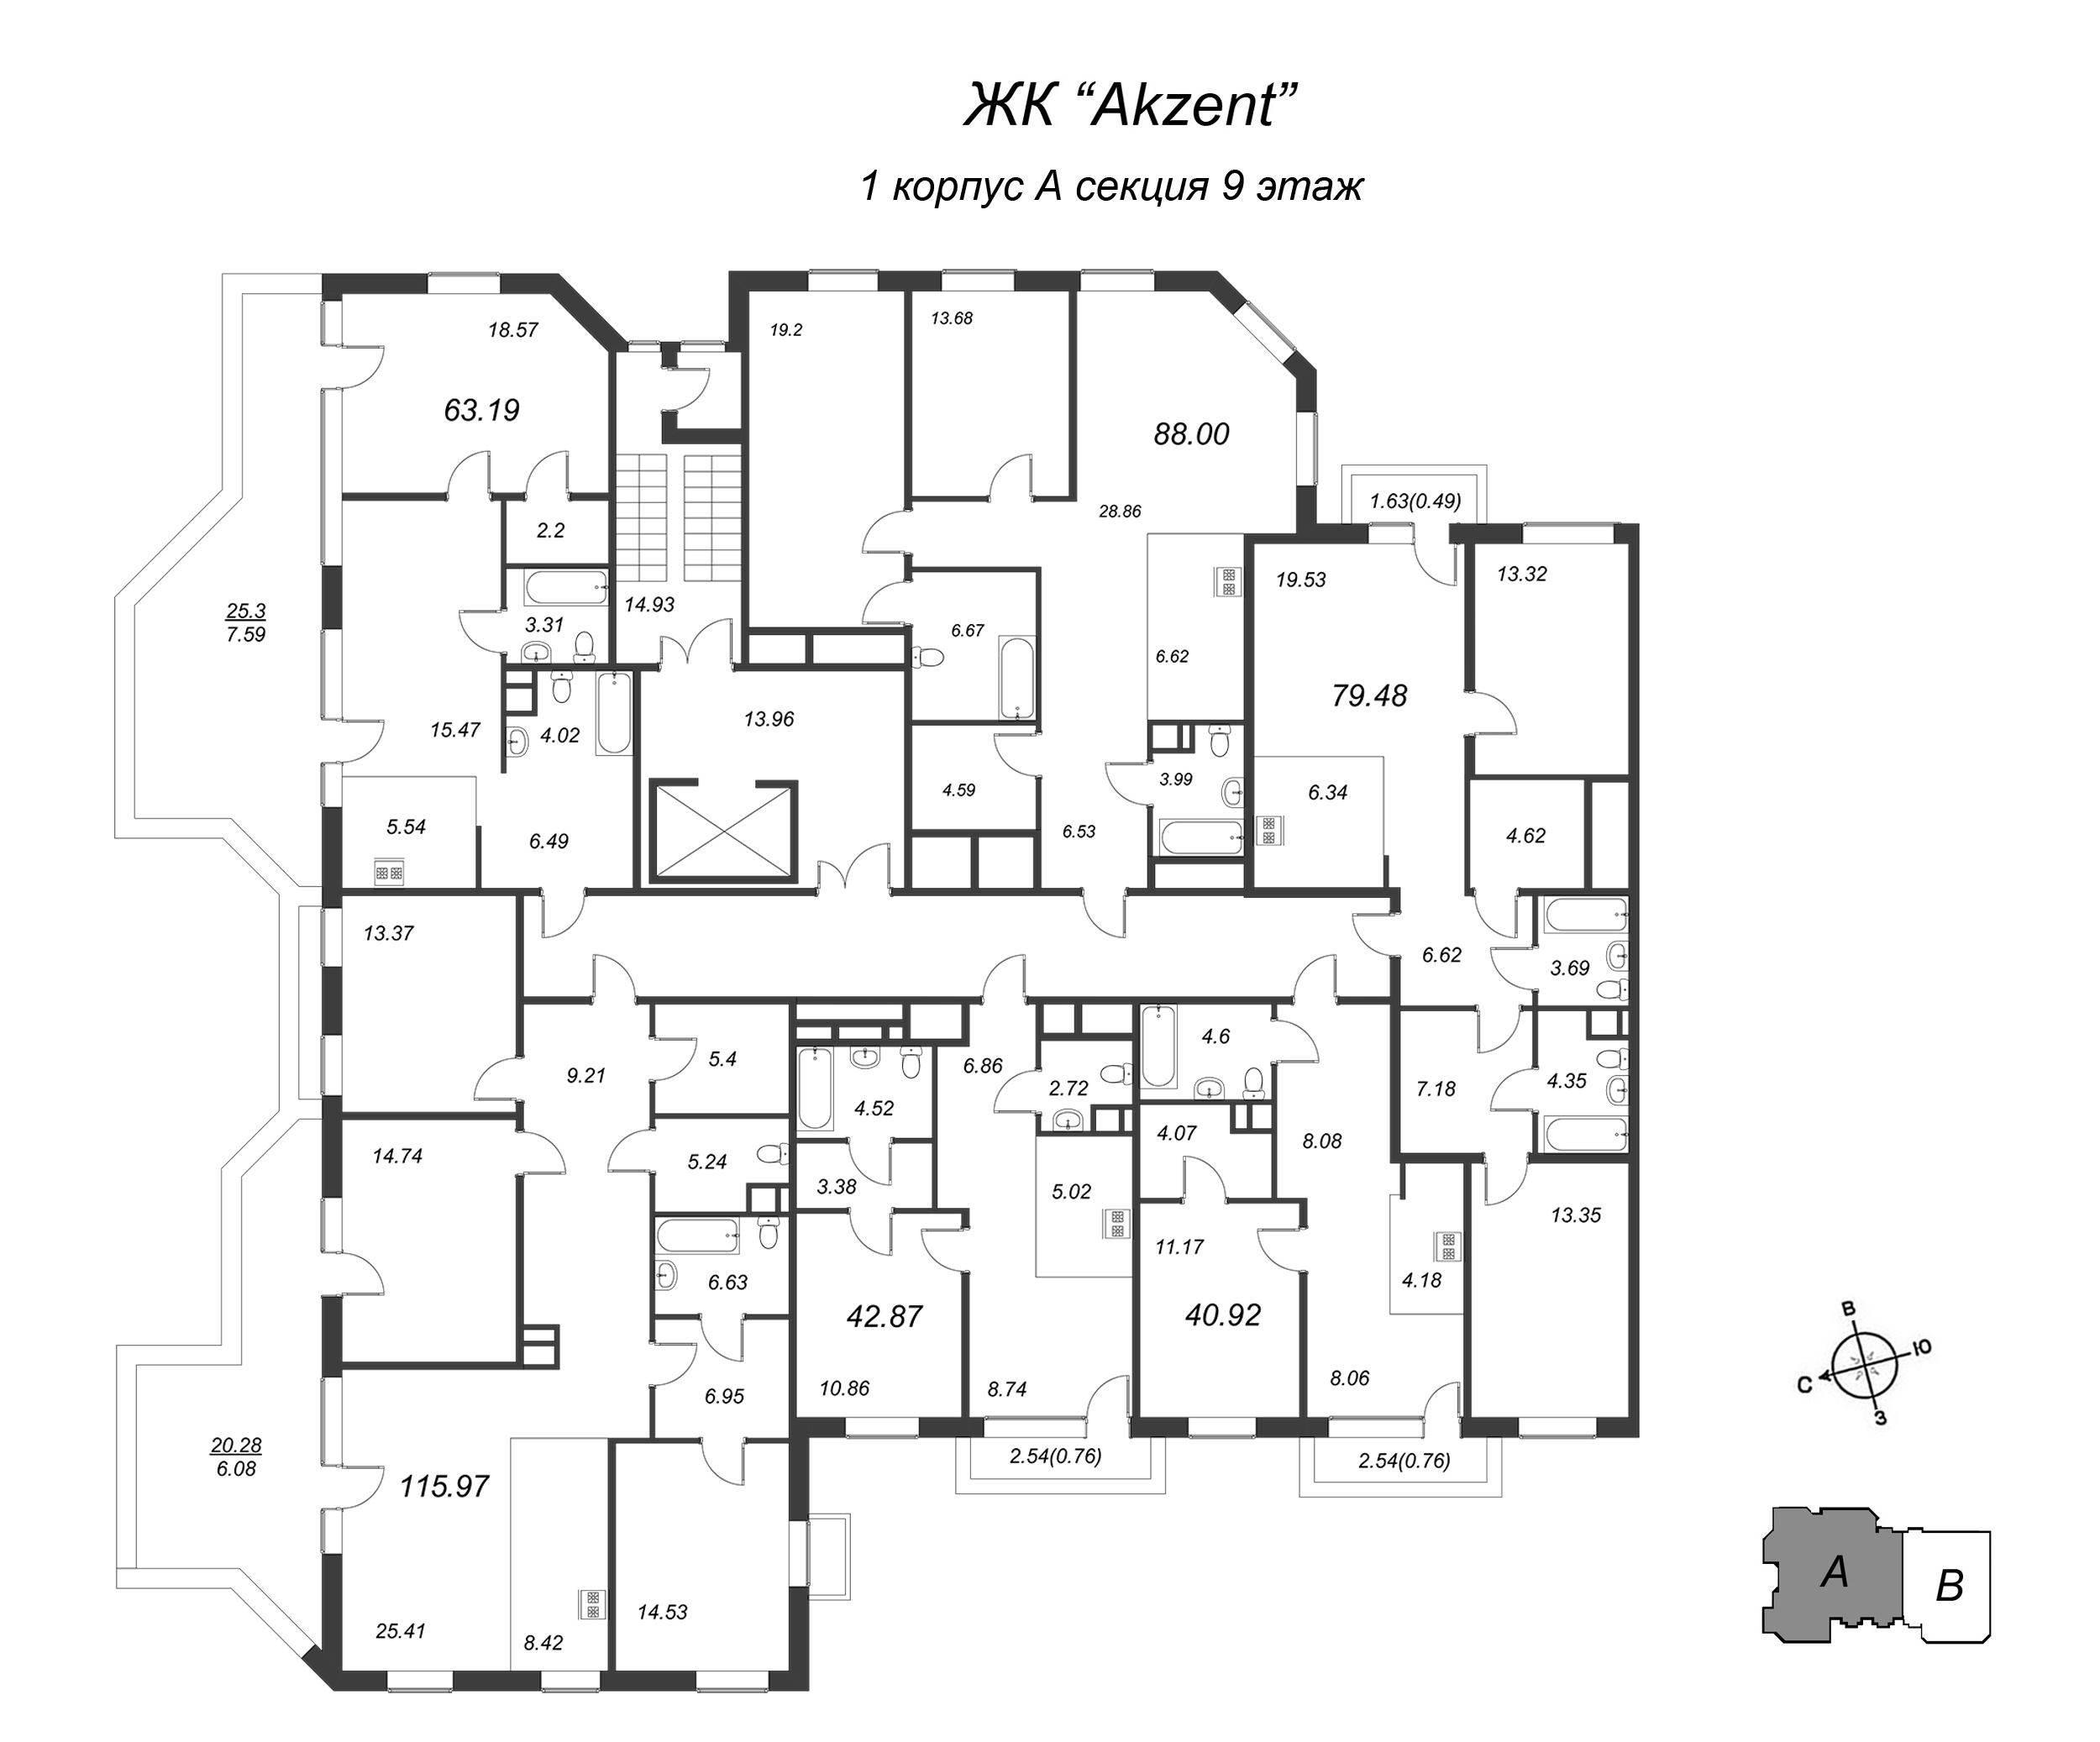 3-комнатная (Евро) квартира, 63.19 м² в ЖК "Akzent" - планировка этажа